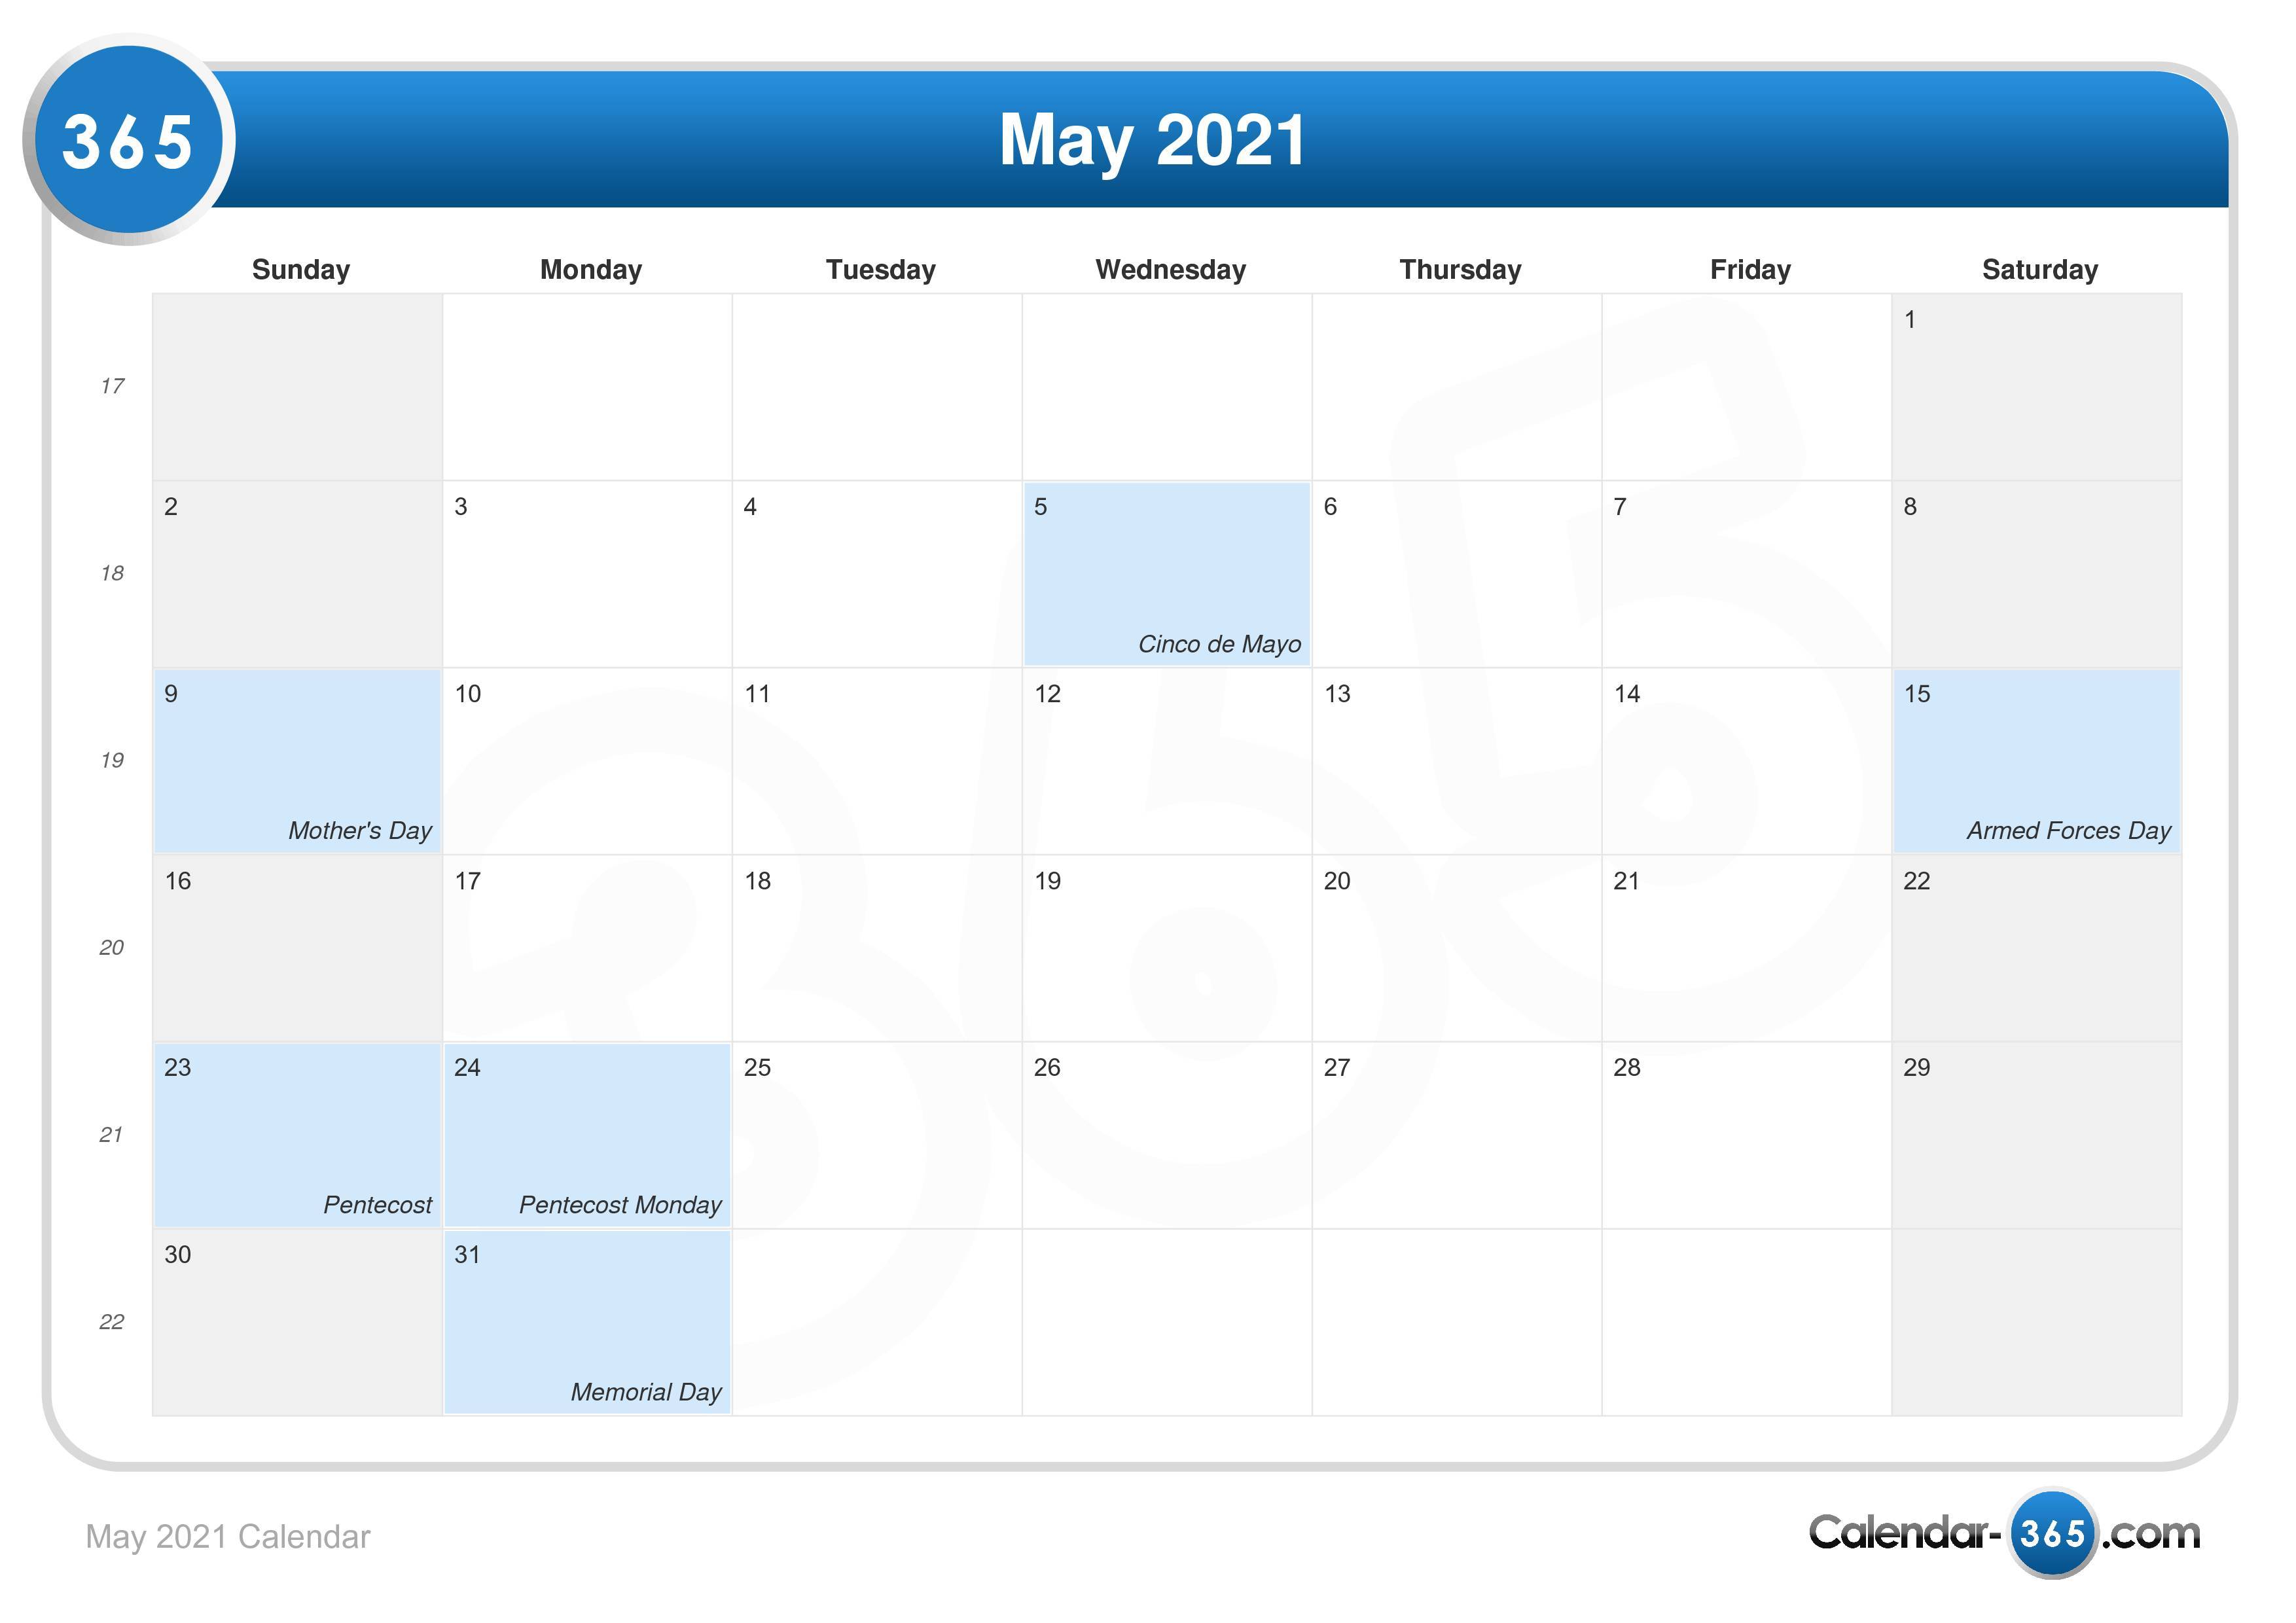 springfield public schools calendar 2021 22 May 2021 Calendar springfield public schools calendar 2021 22